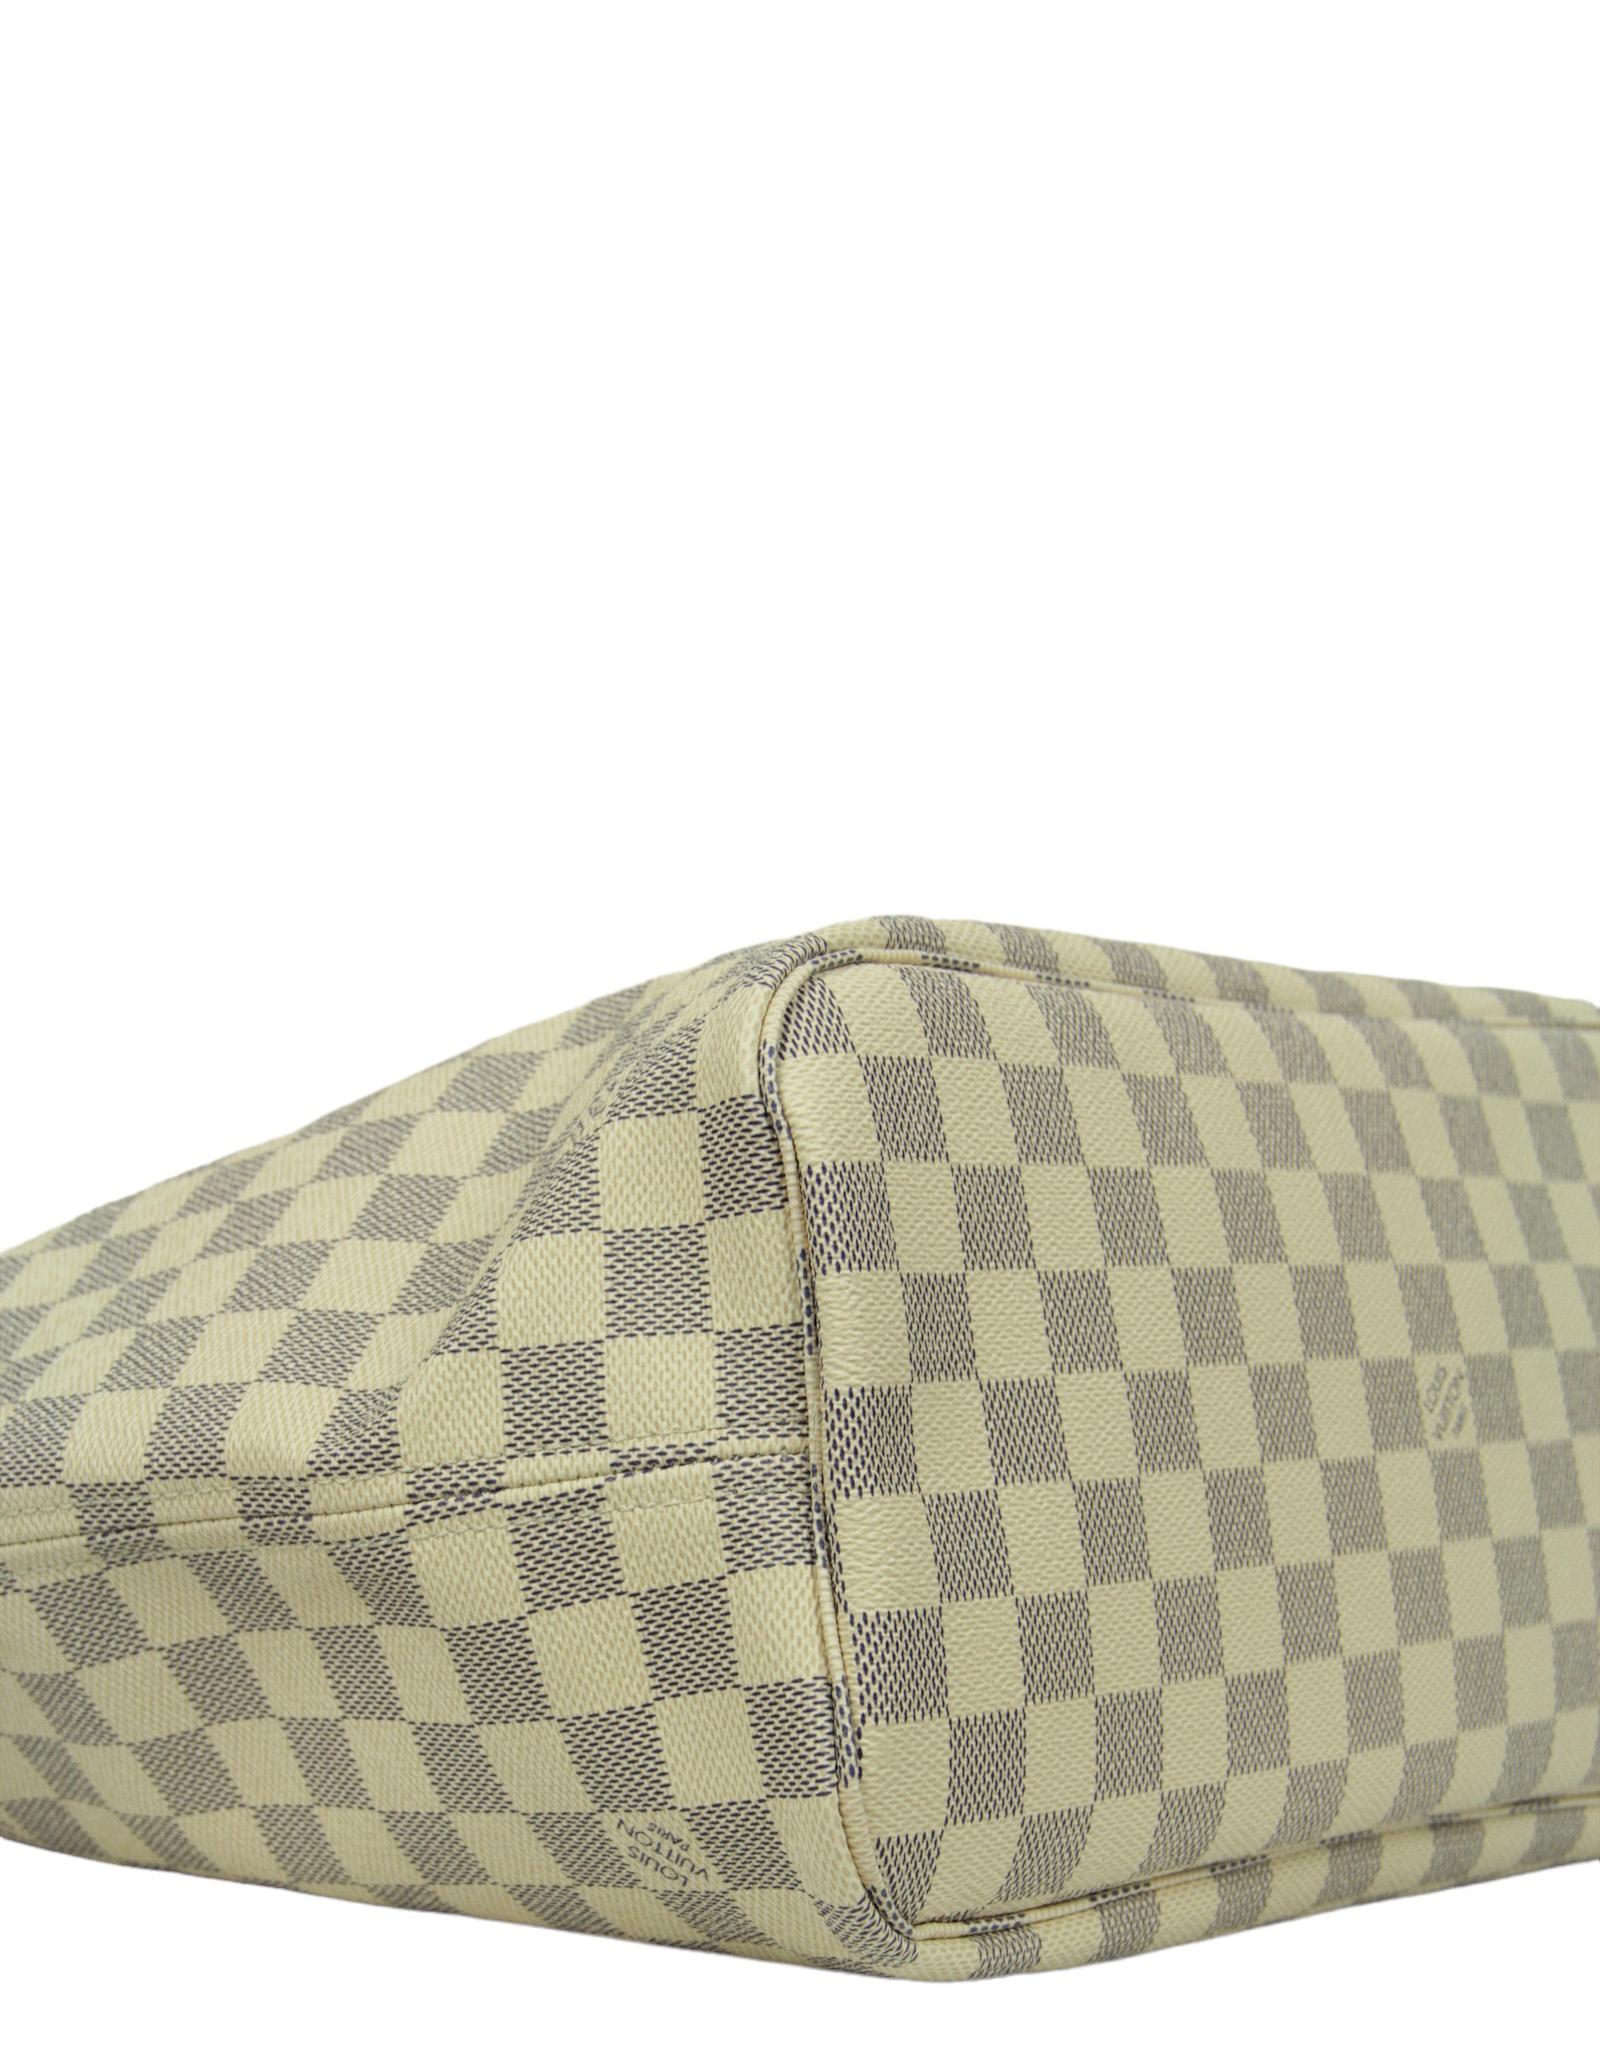 Louis Vuitton Damier Azur Neverfull MM Tote Bag For Sale 1